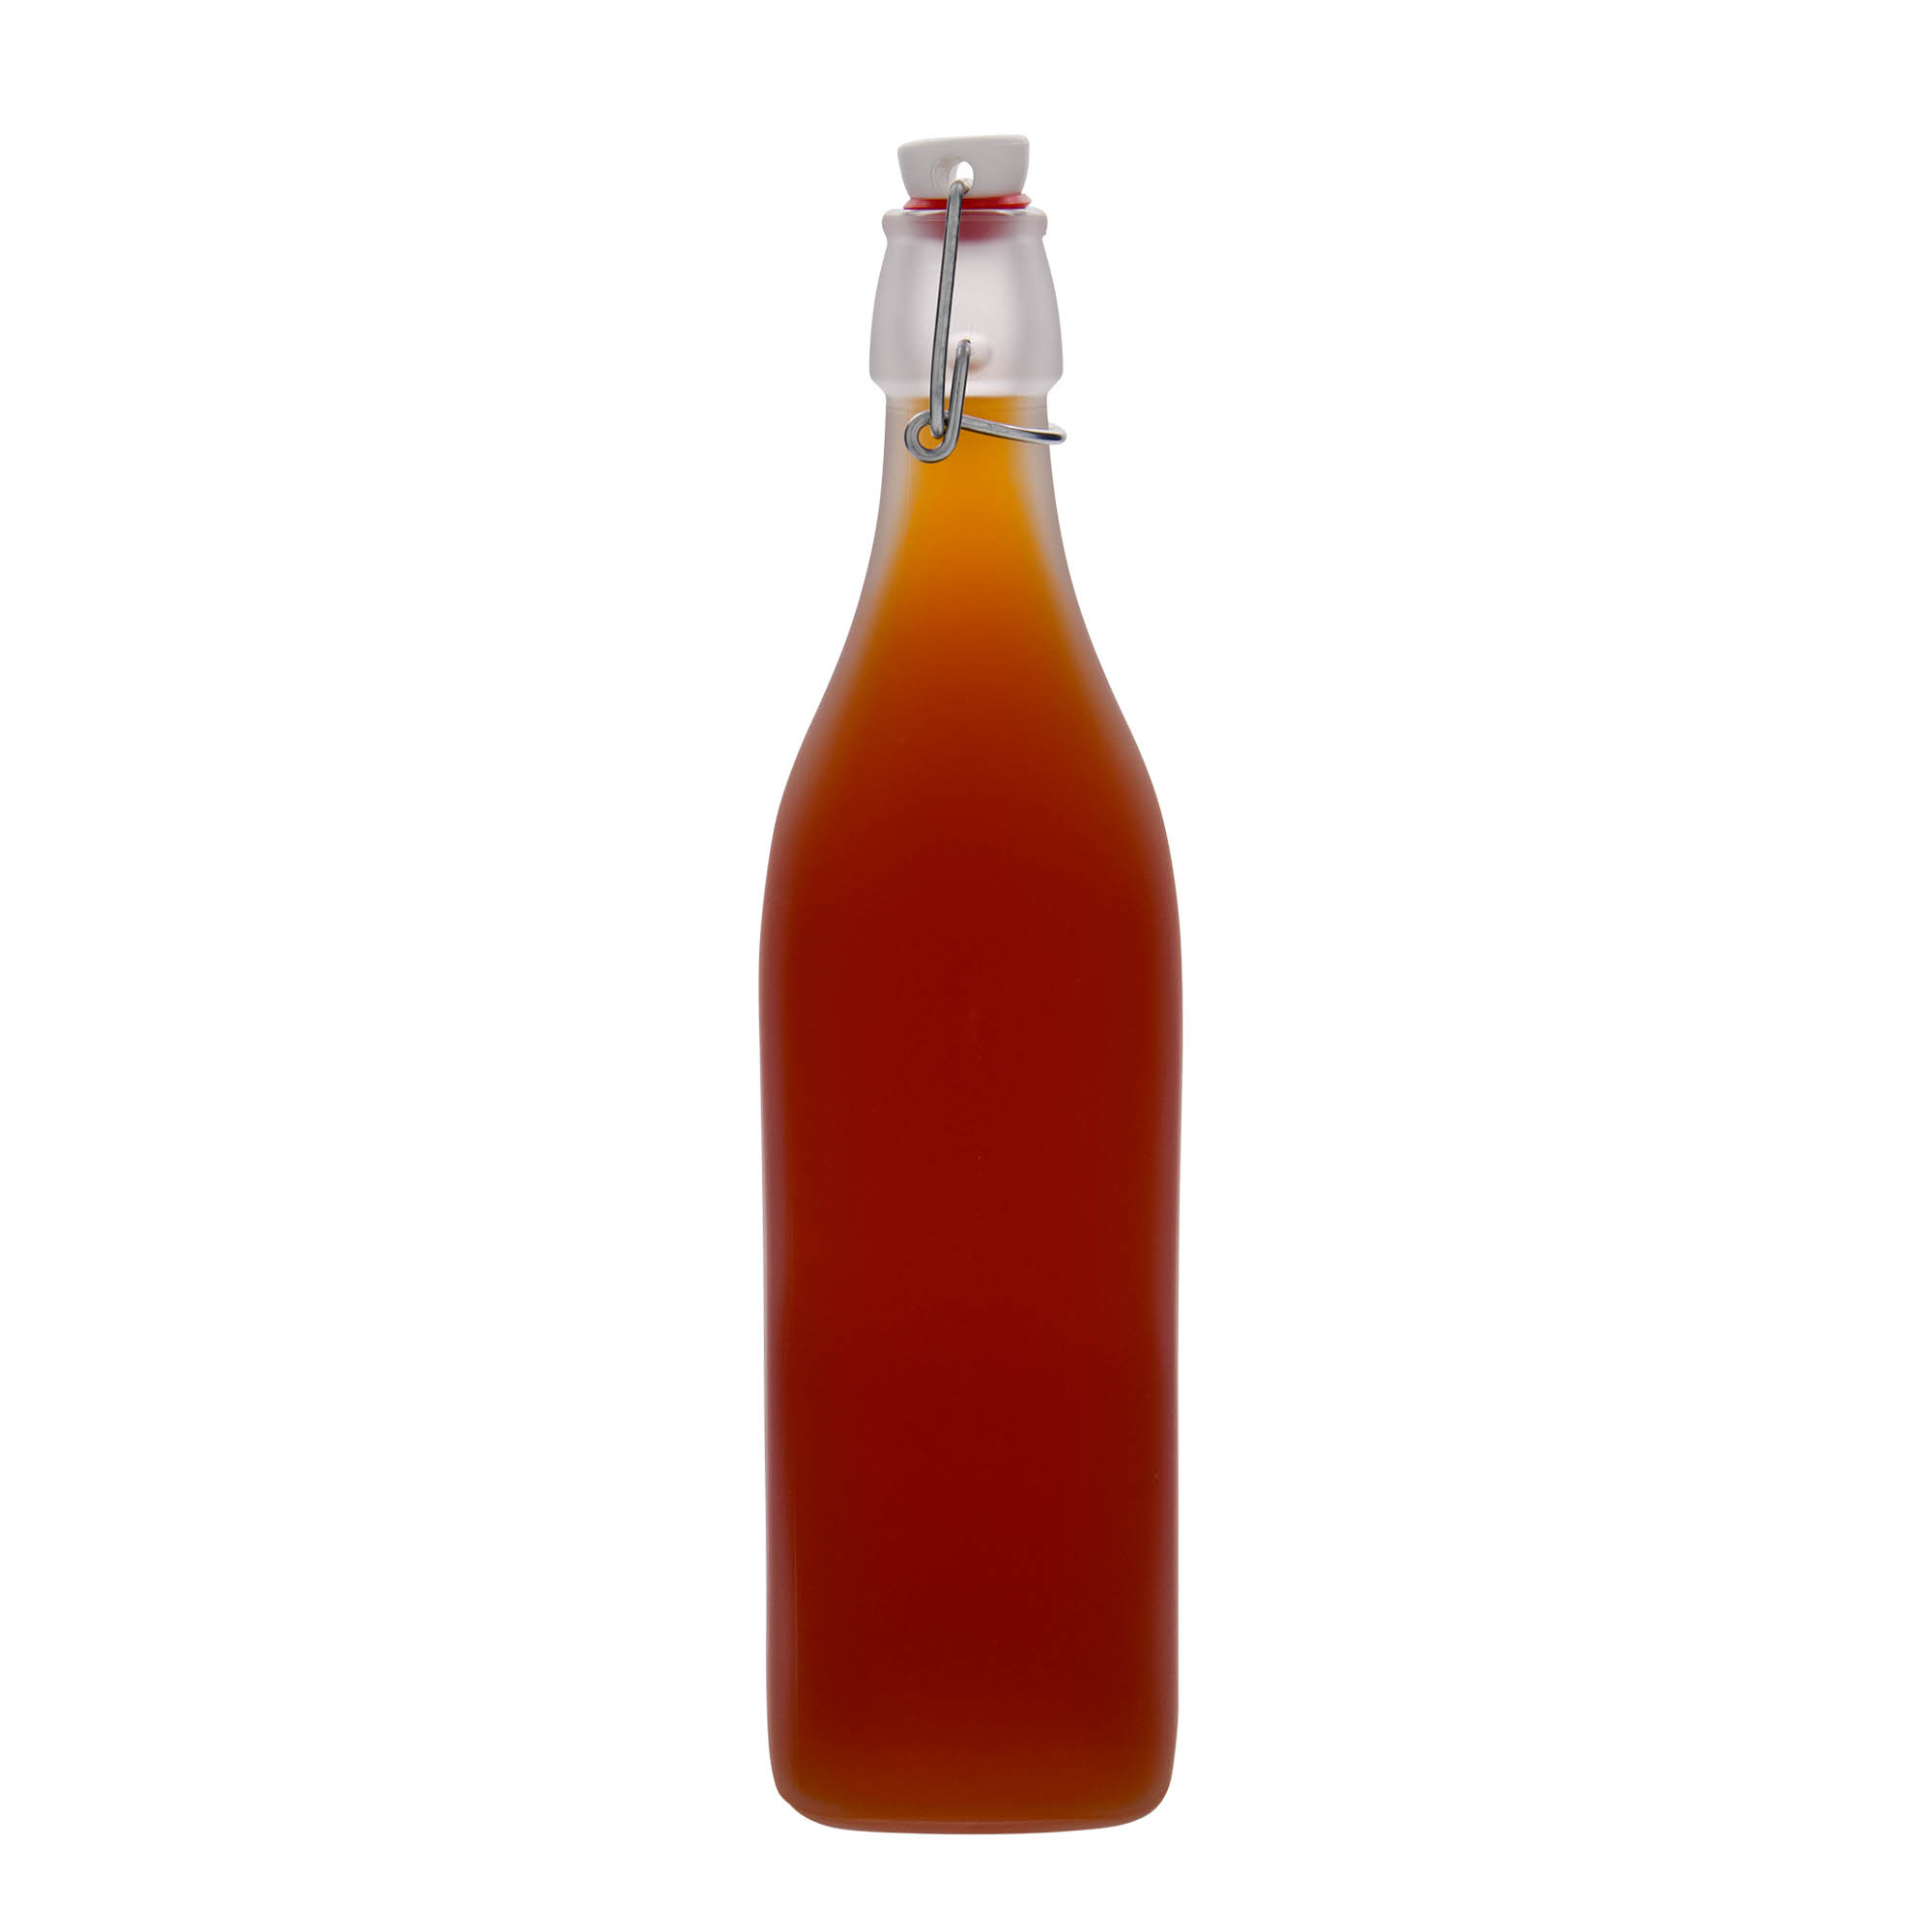 1,000 ml glass bottle 'Swing', square, white, closure: swing top